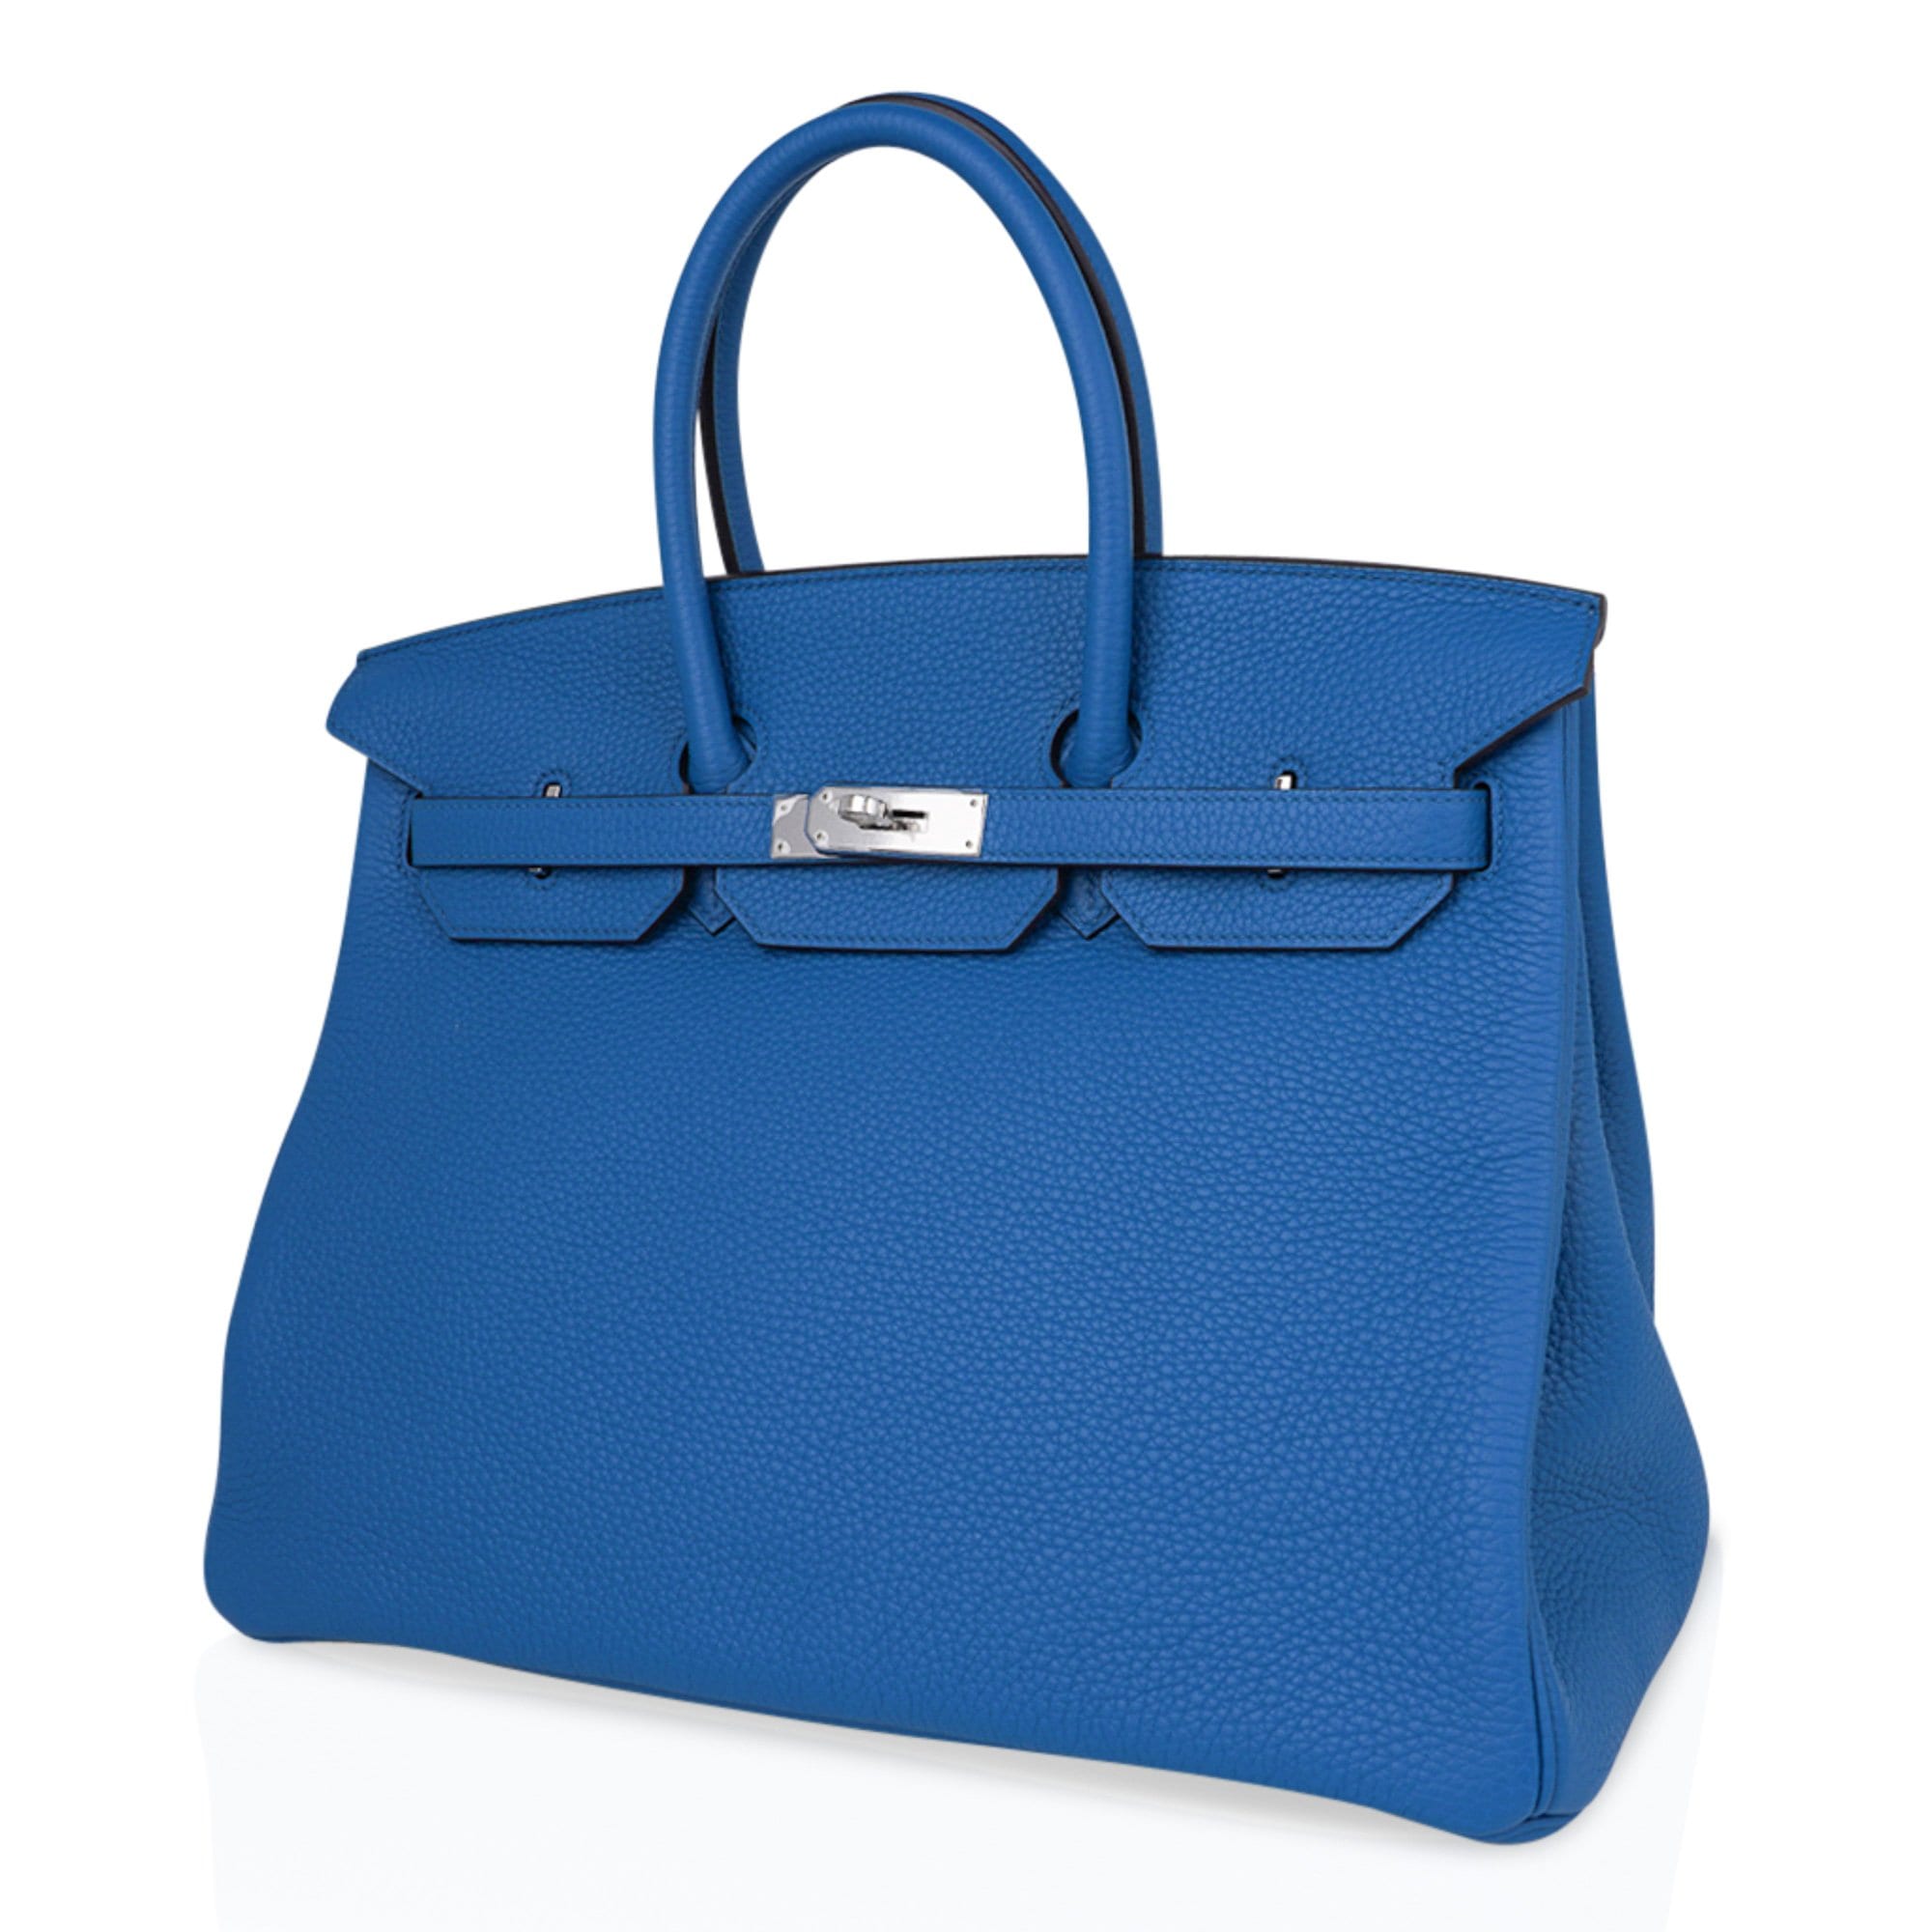 Hermes Birkin 35 Bag Bleu de France Palladium Hardware Togo Leather